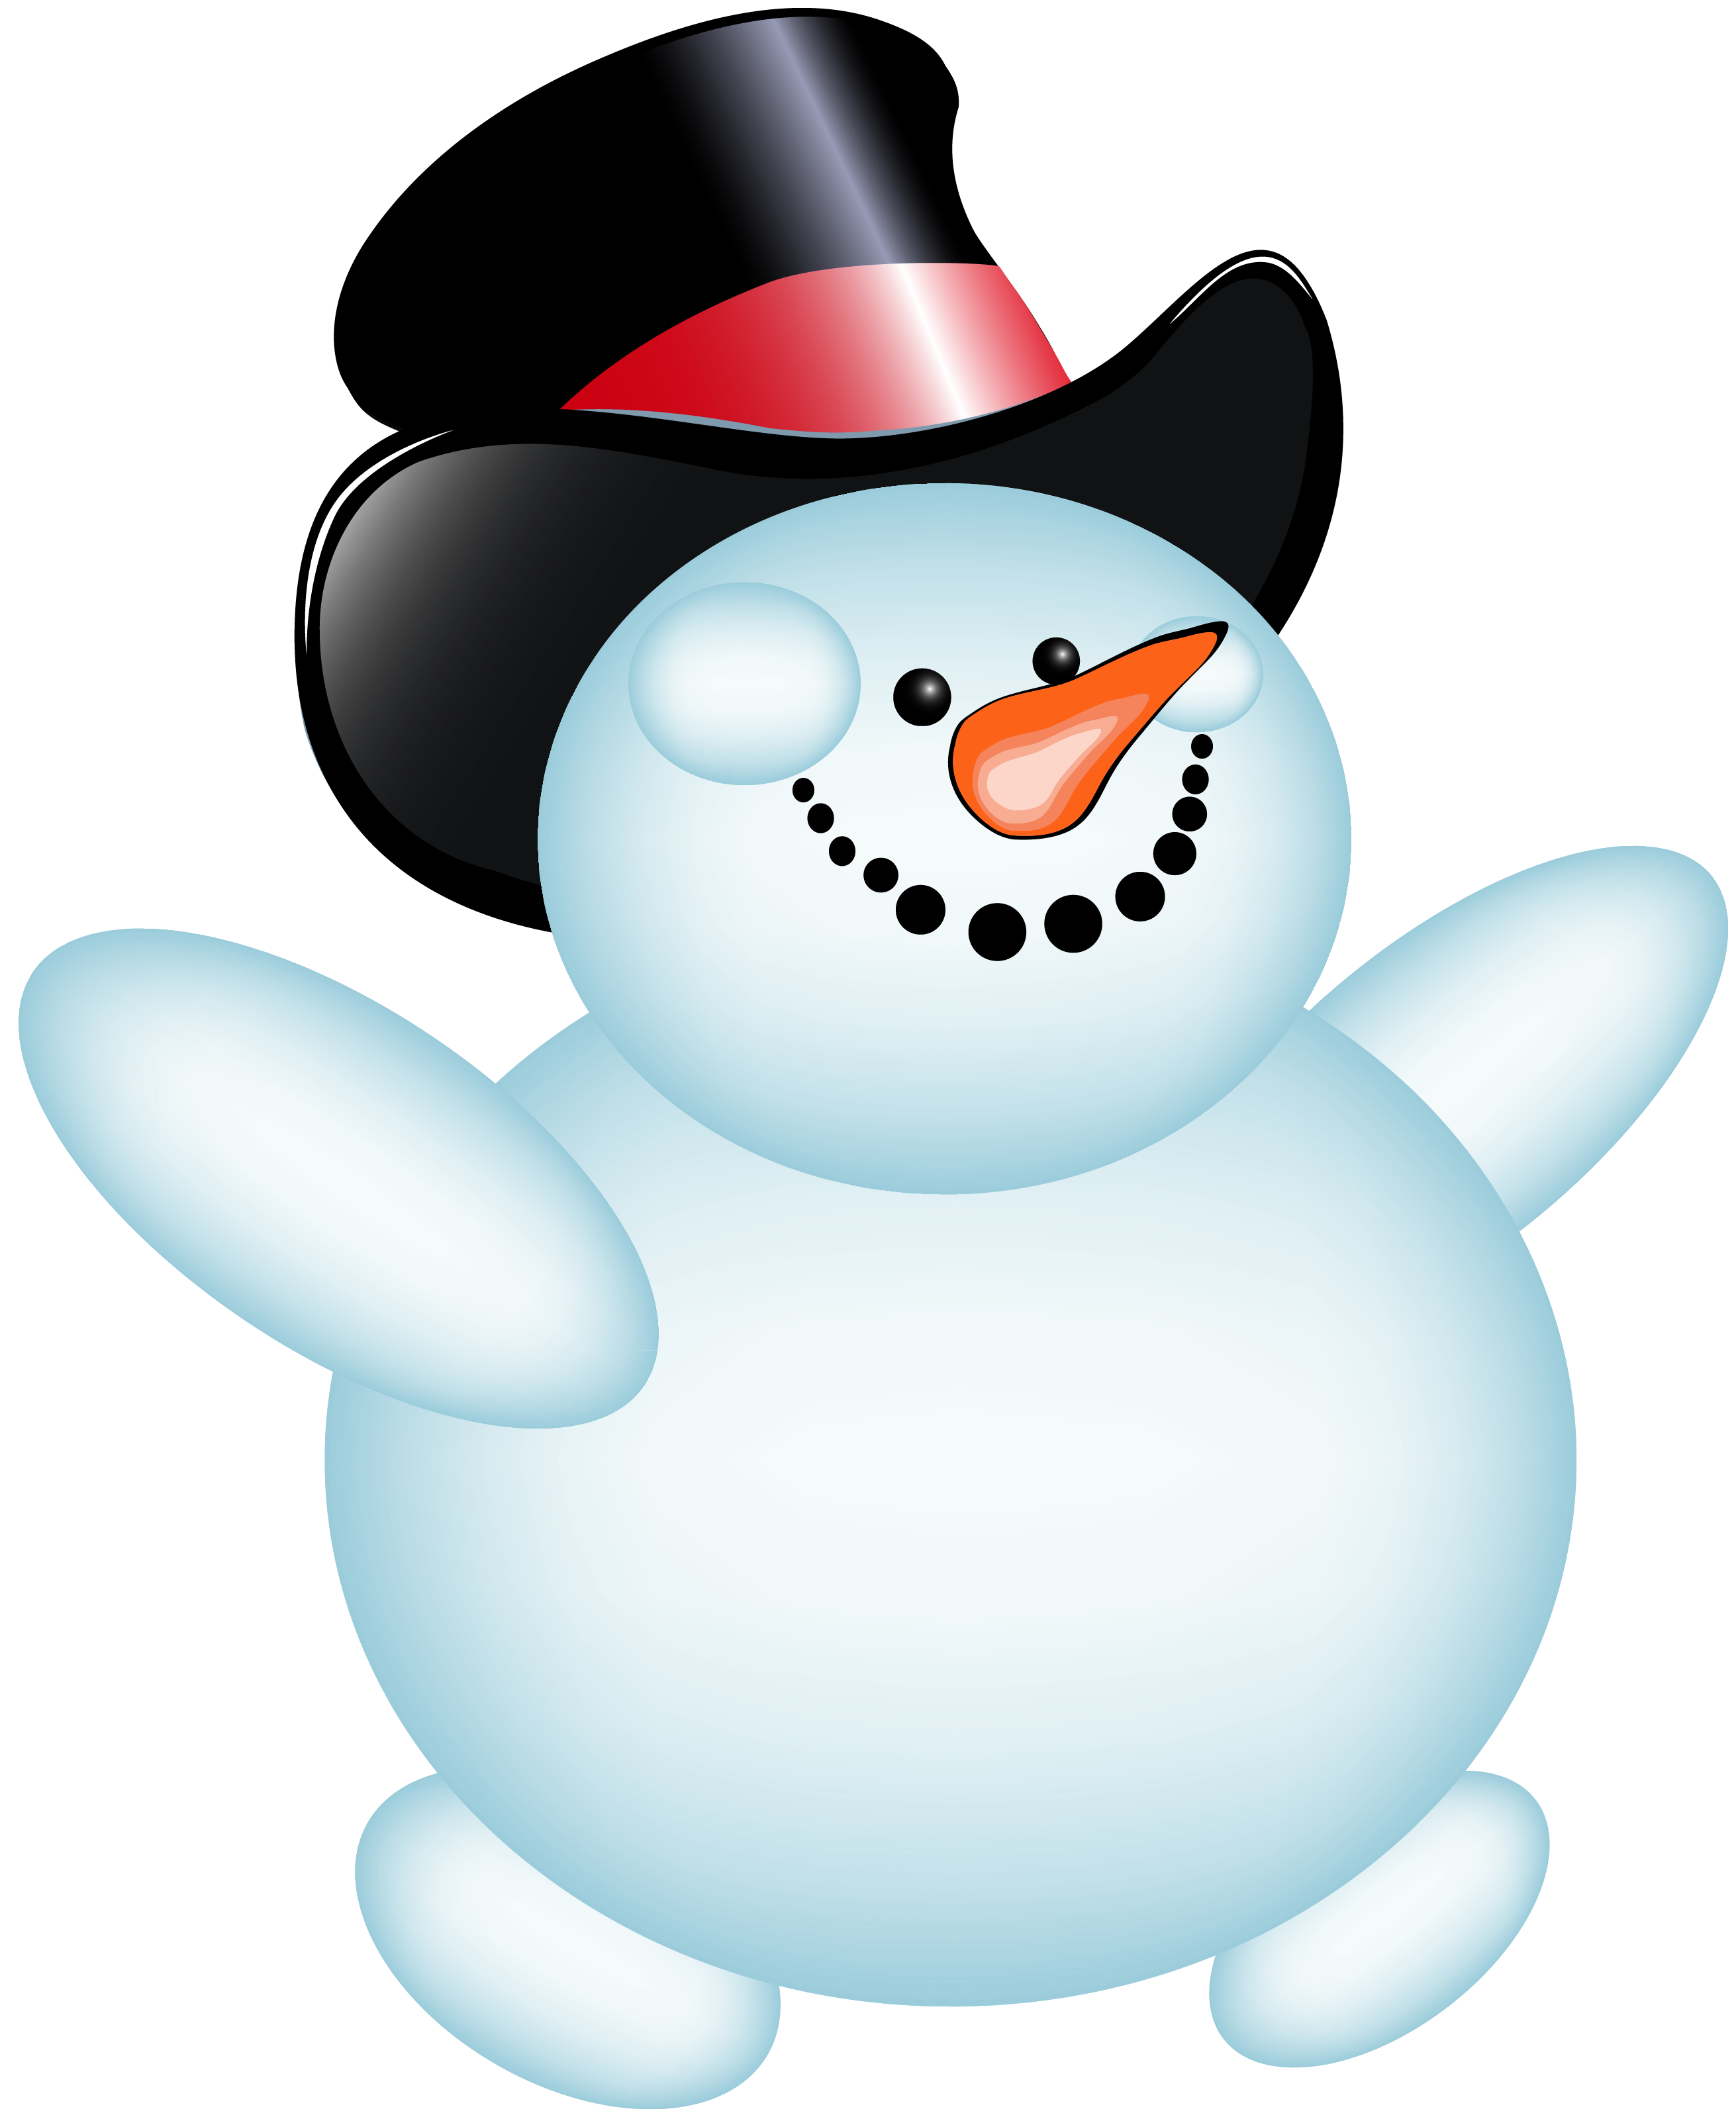 Snowman clipart. Free download transparent .PNG